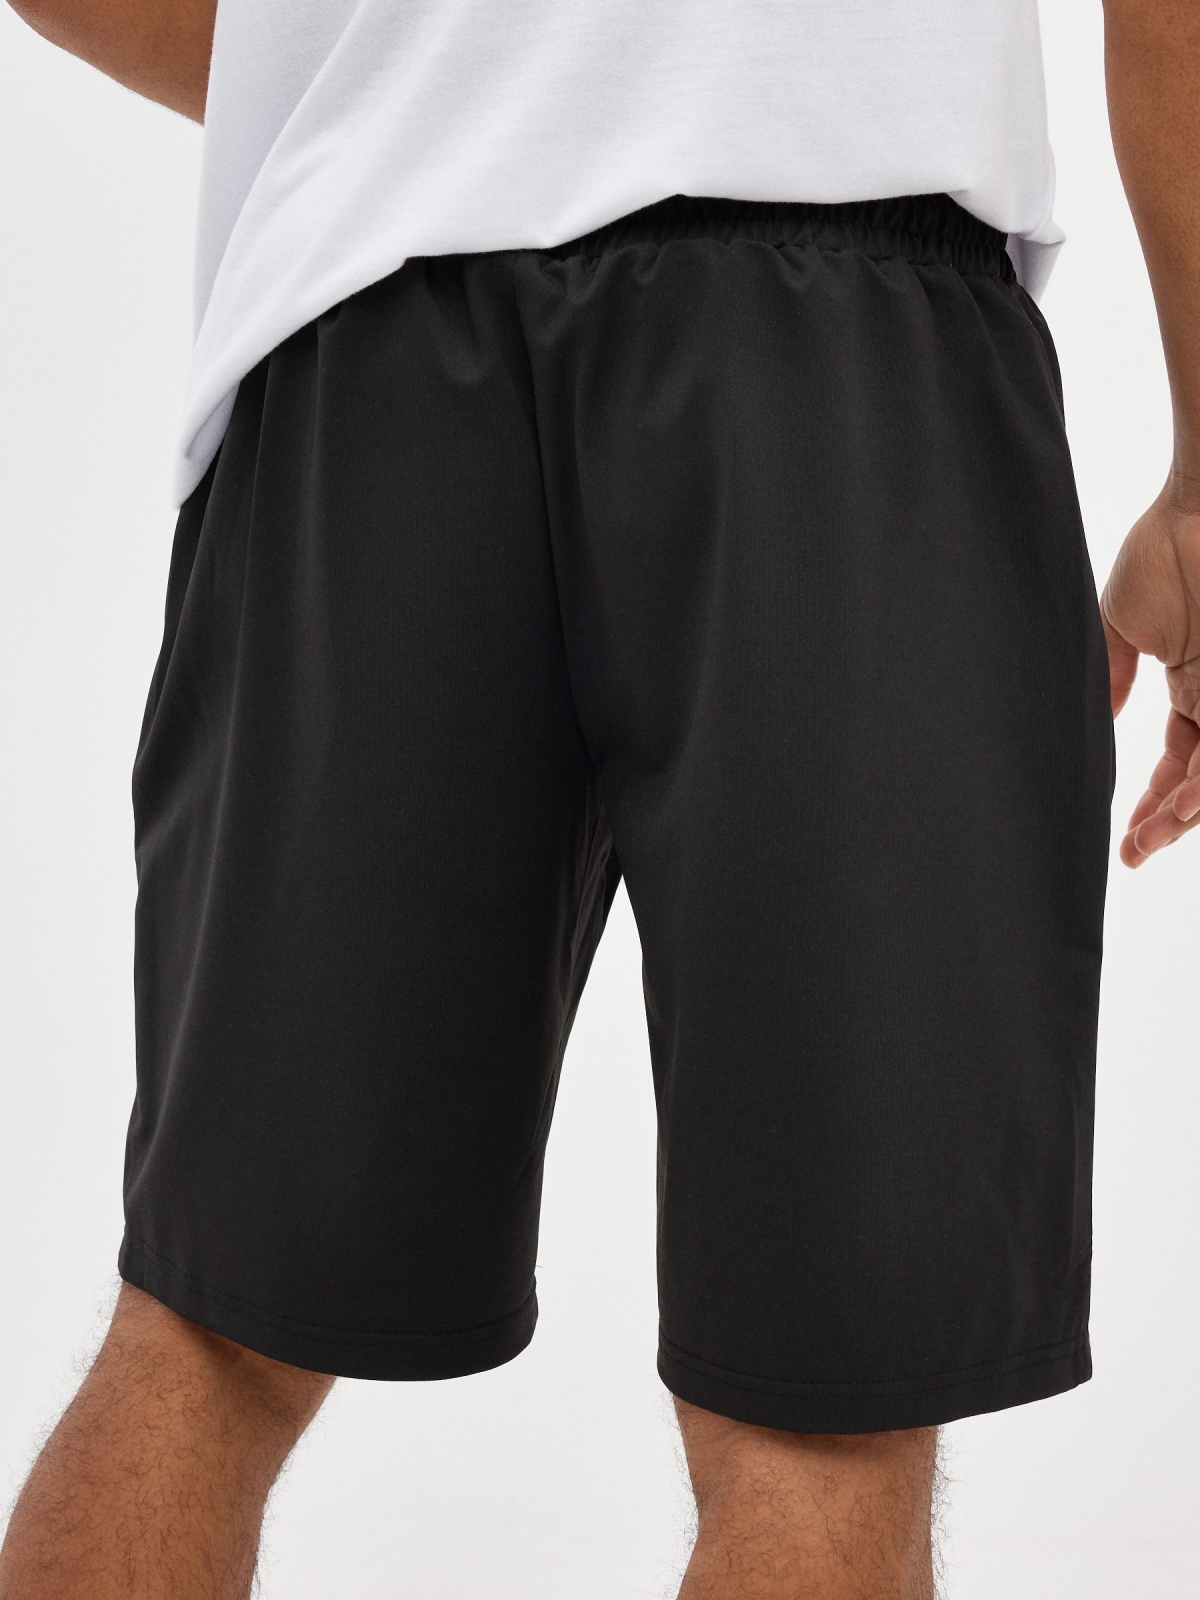 Printed Bermuda jogger shorts black detail view